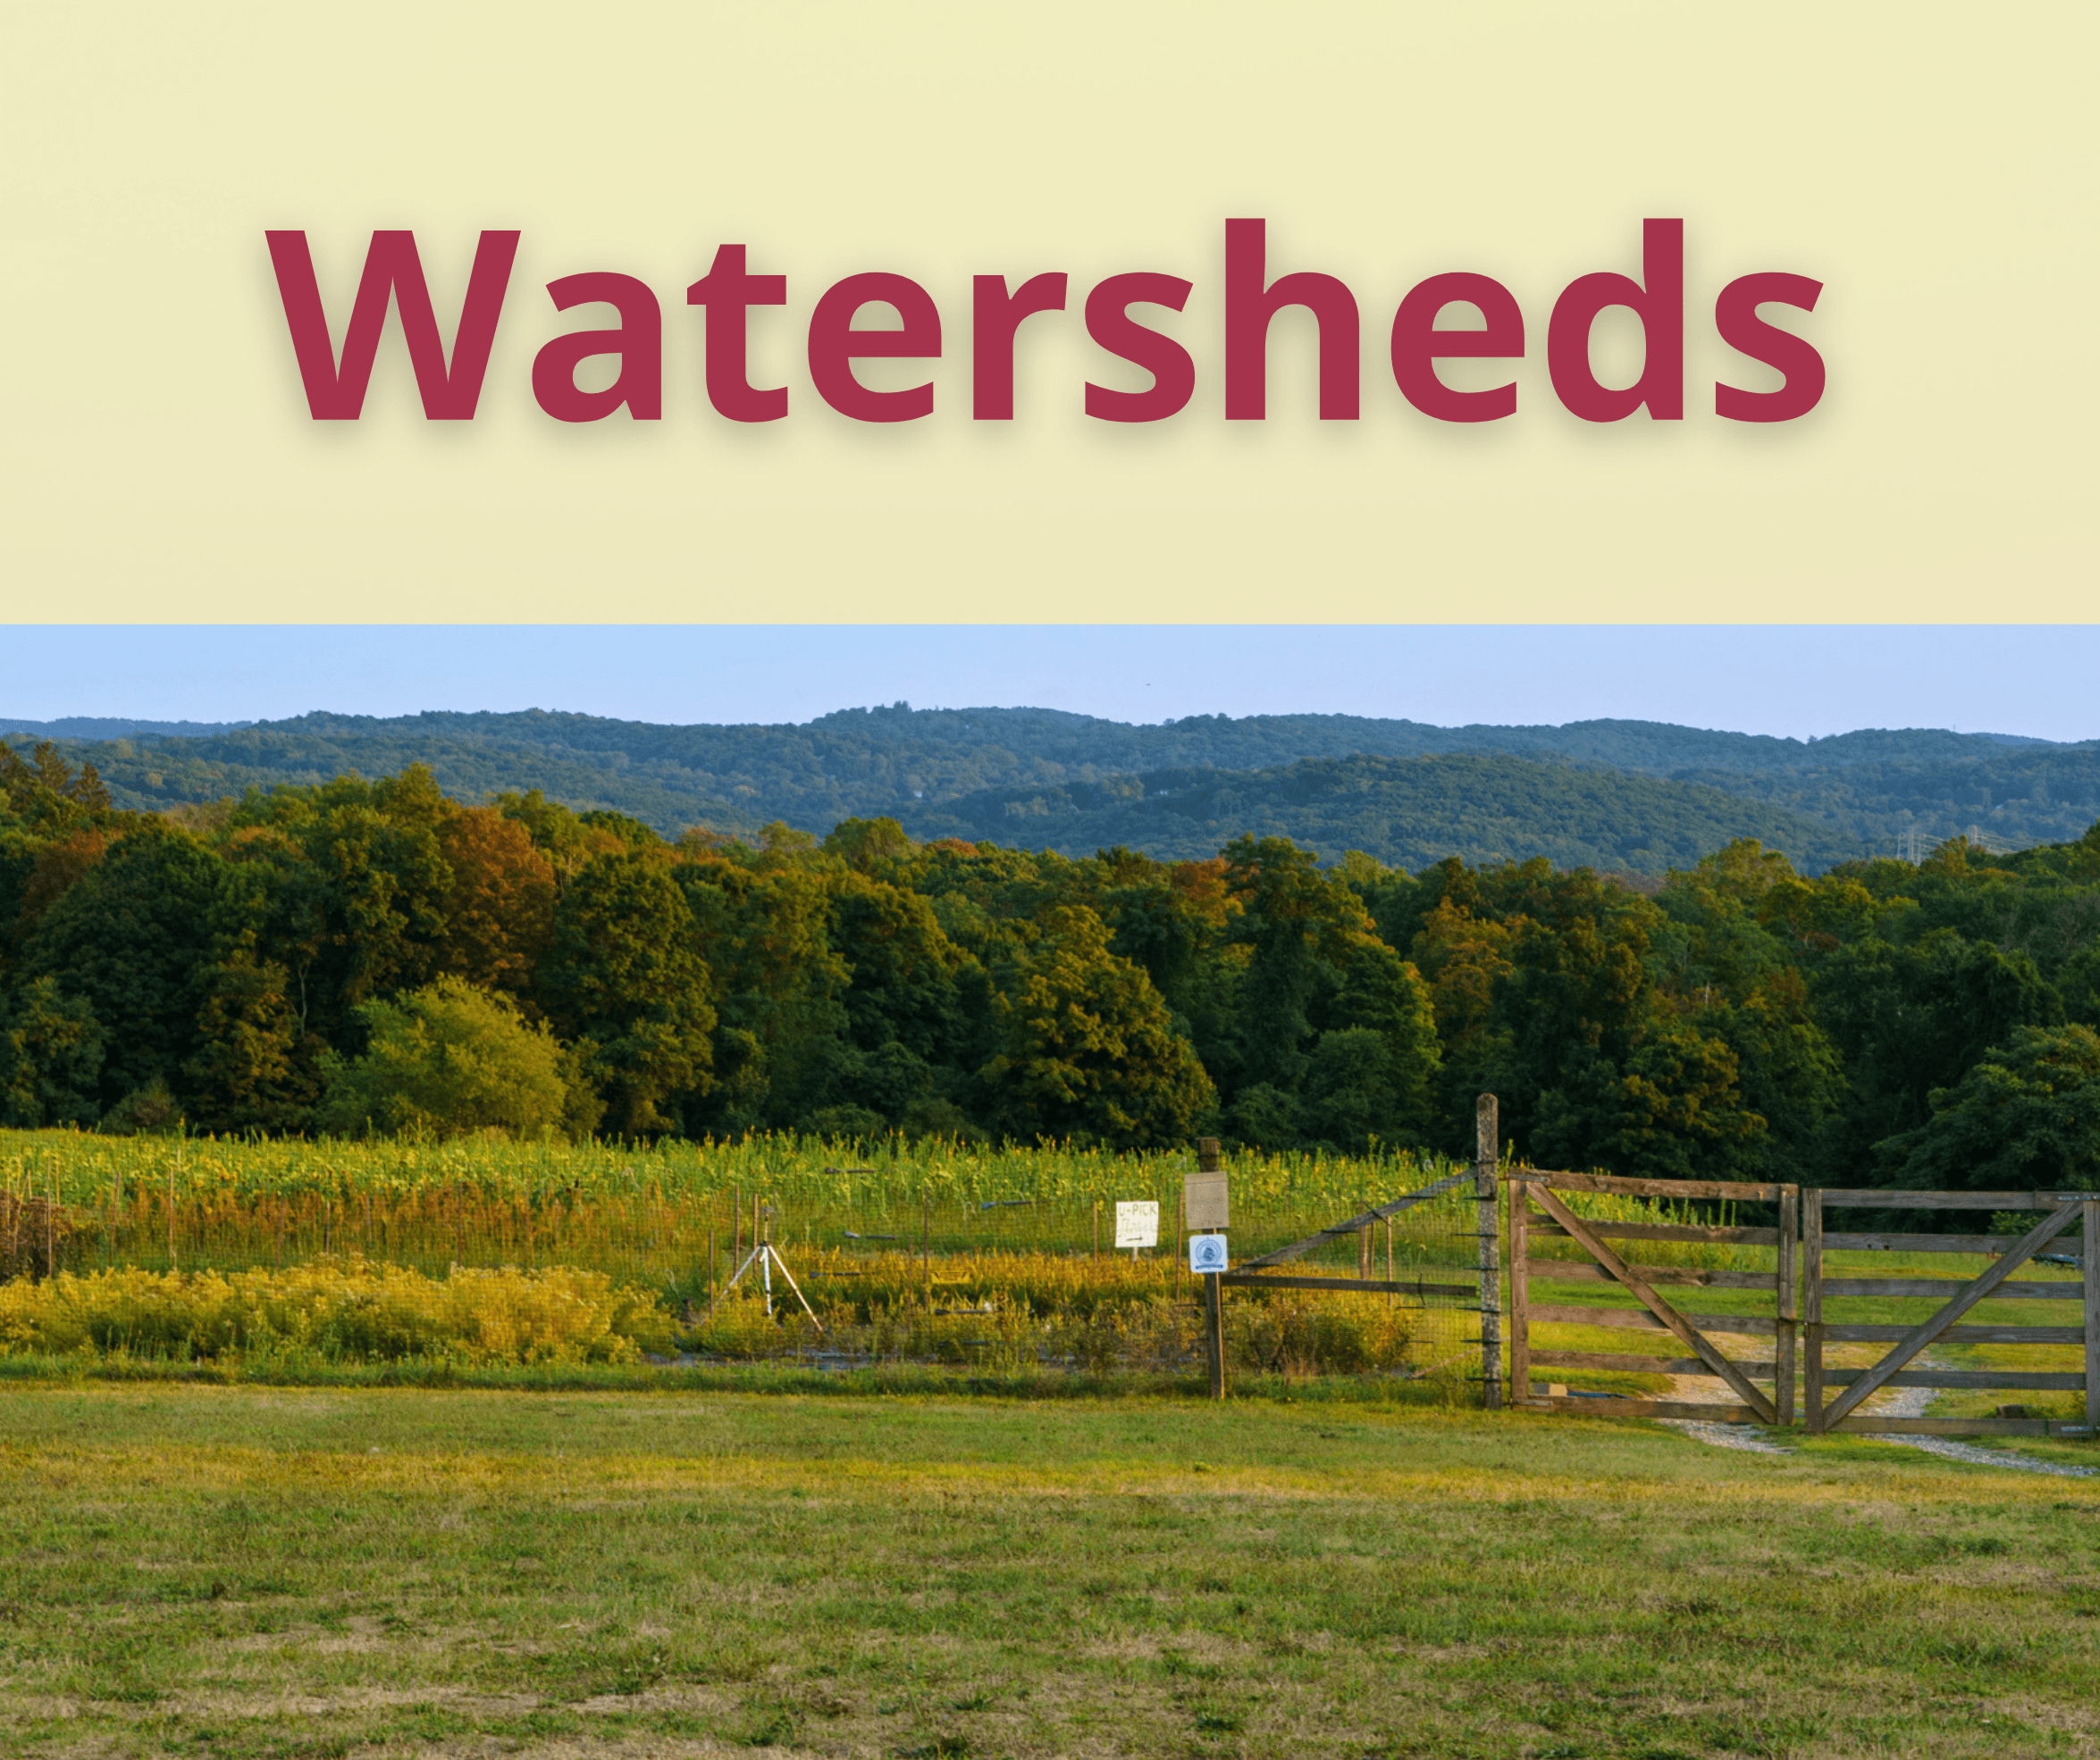 Watersheds: 6 - 8